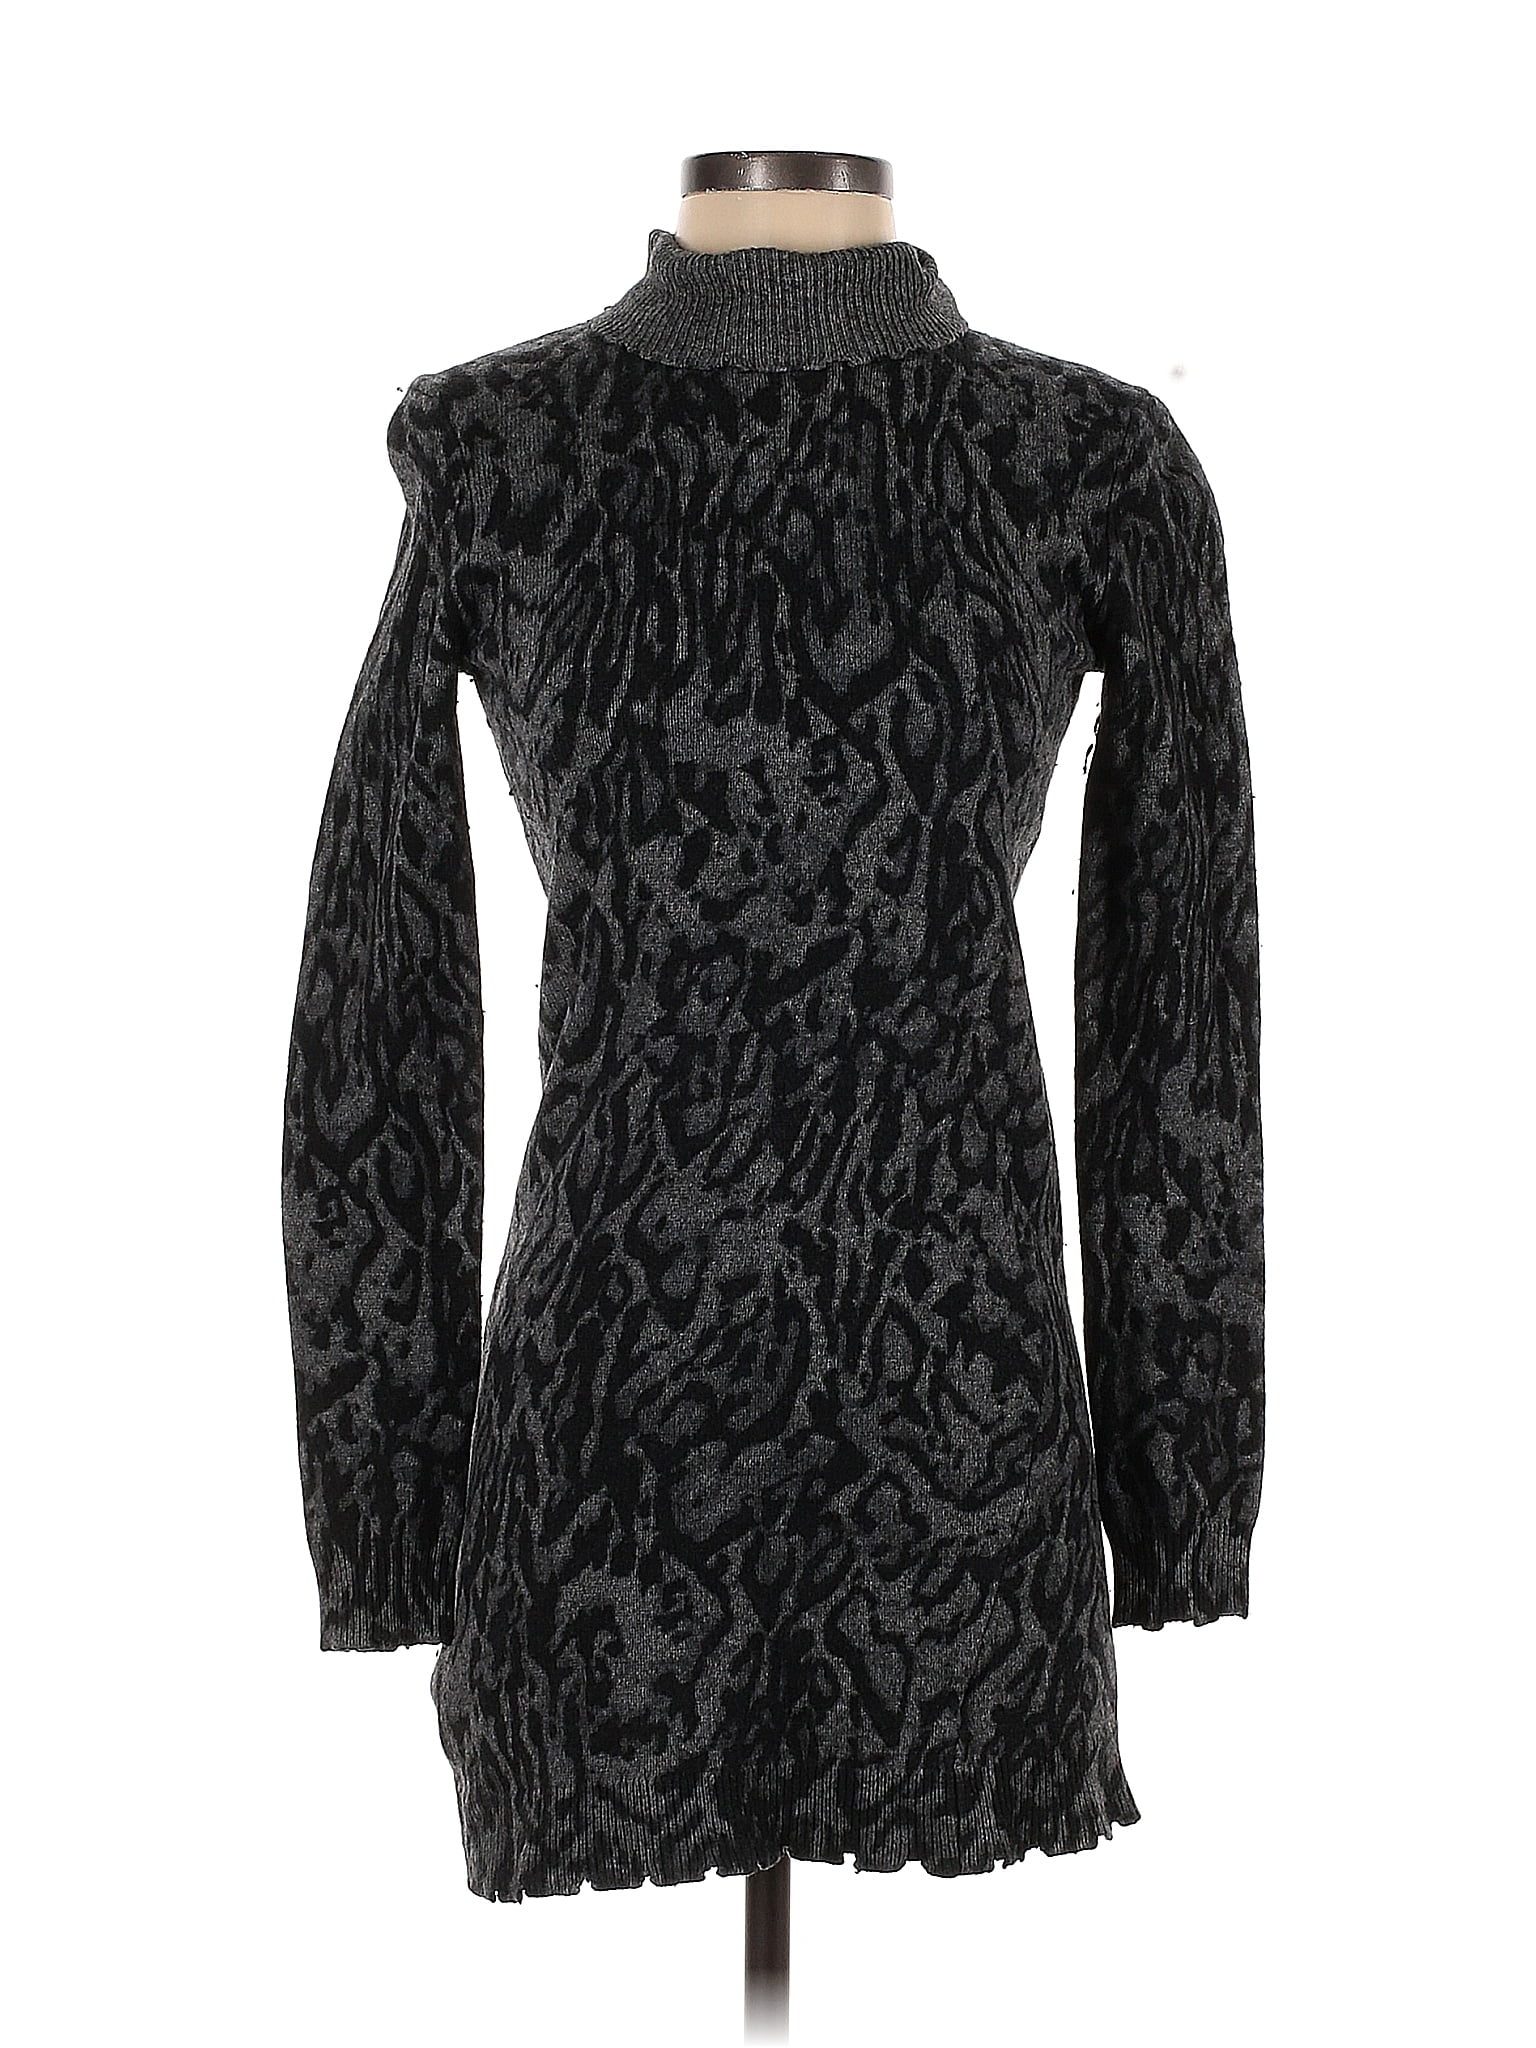 Pam & Gela Gray Ocelot Mock Neck Dress Size S - 80% off